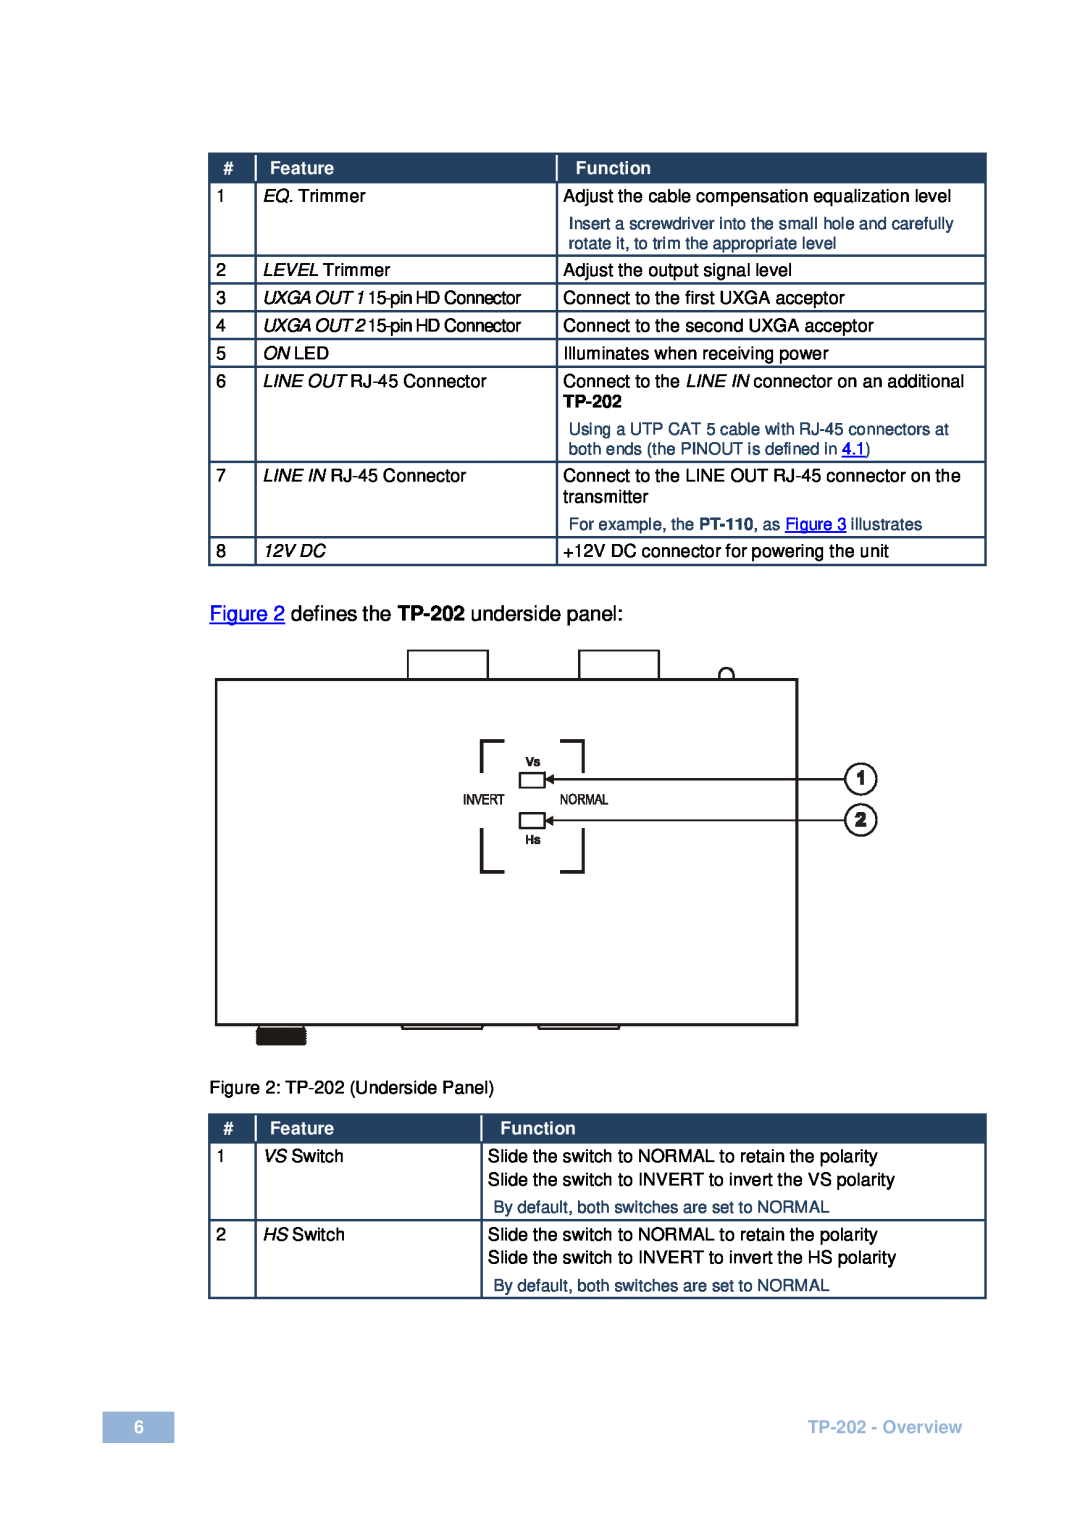 Kramer Electronics user manual Feature, Function, On Led, 12V DC, TP-202- Overview 